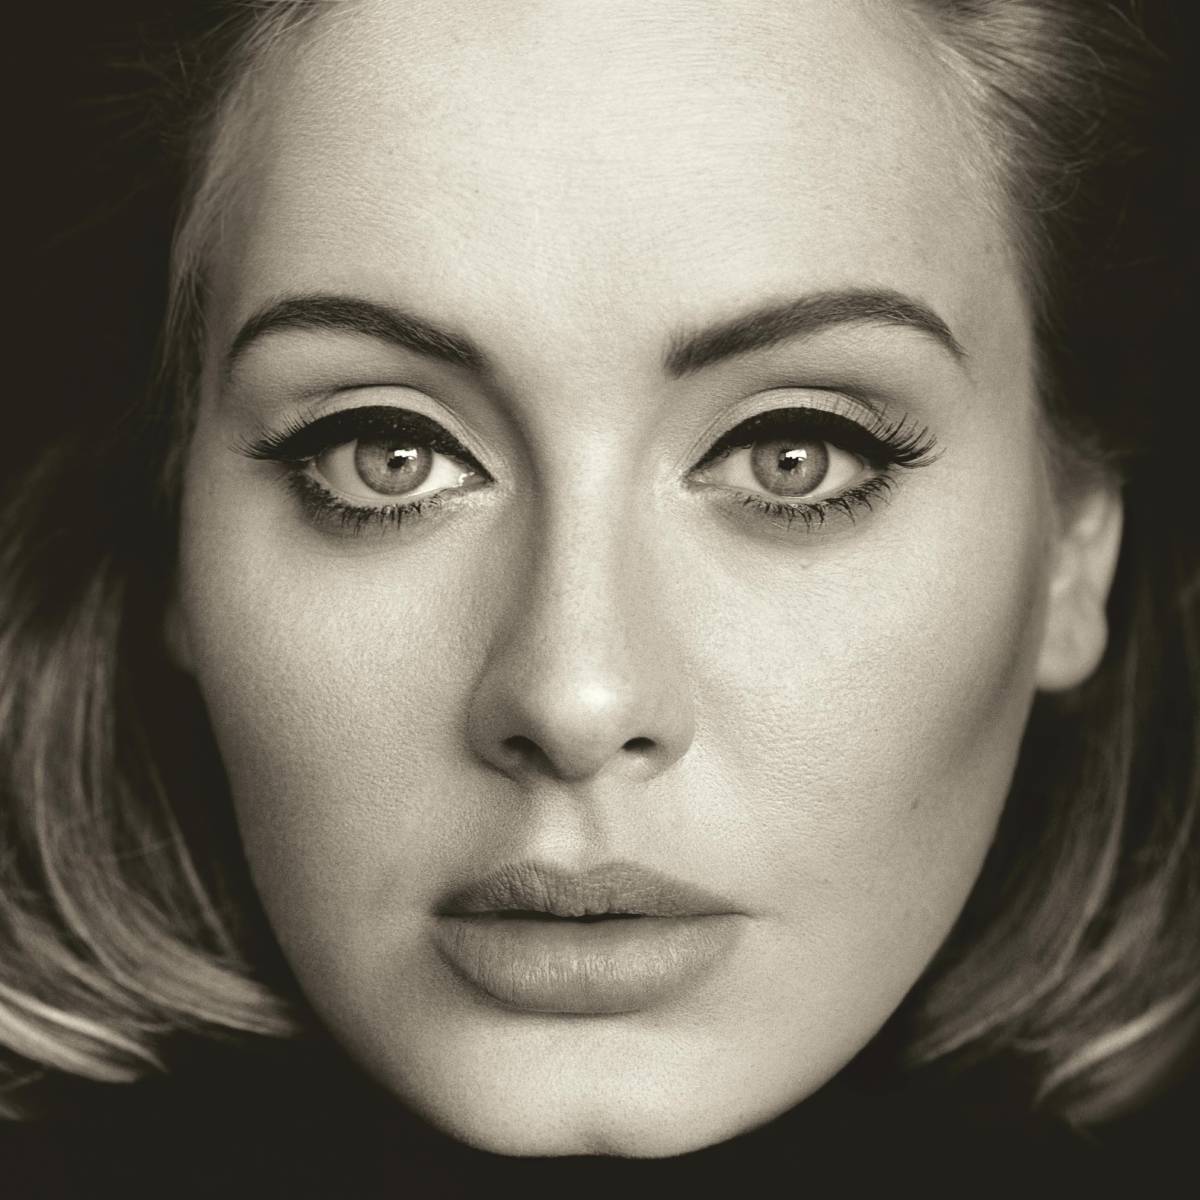 "25" (reprise du troisième album studio d'Adele)